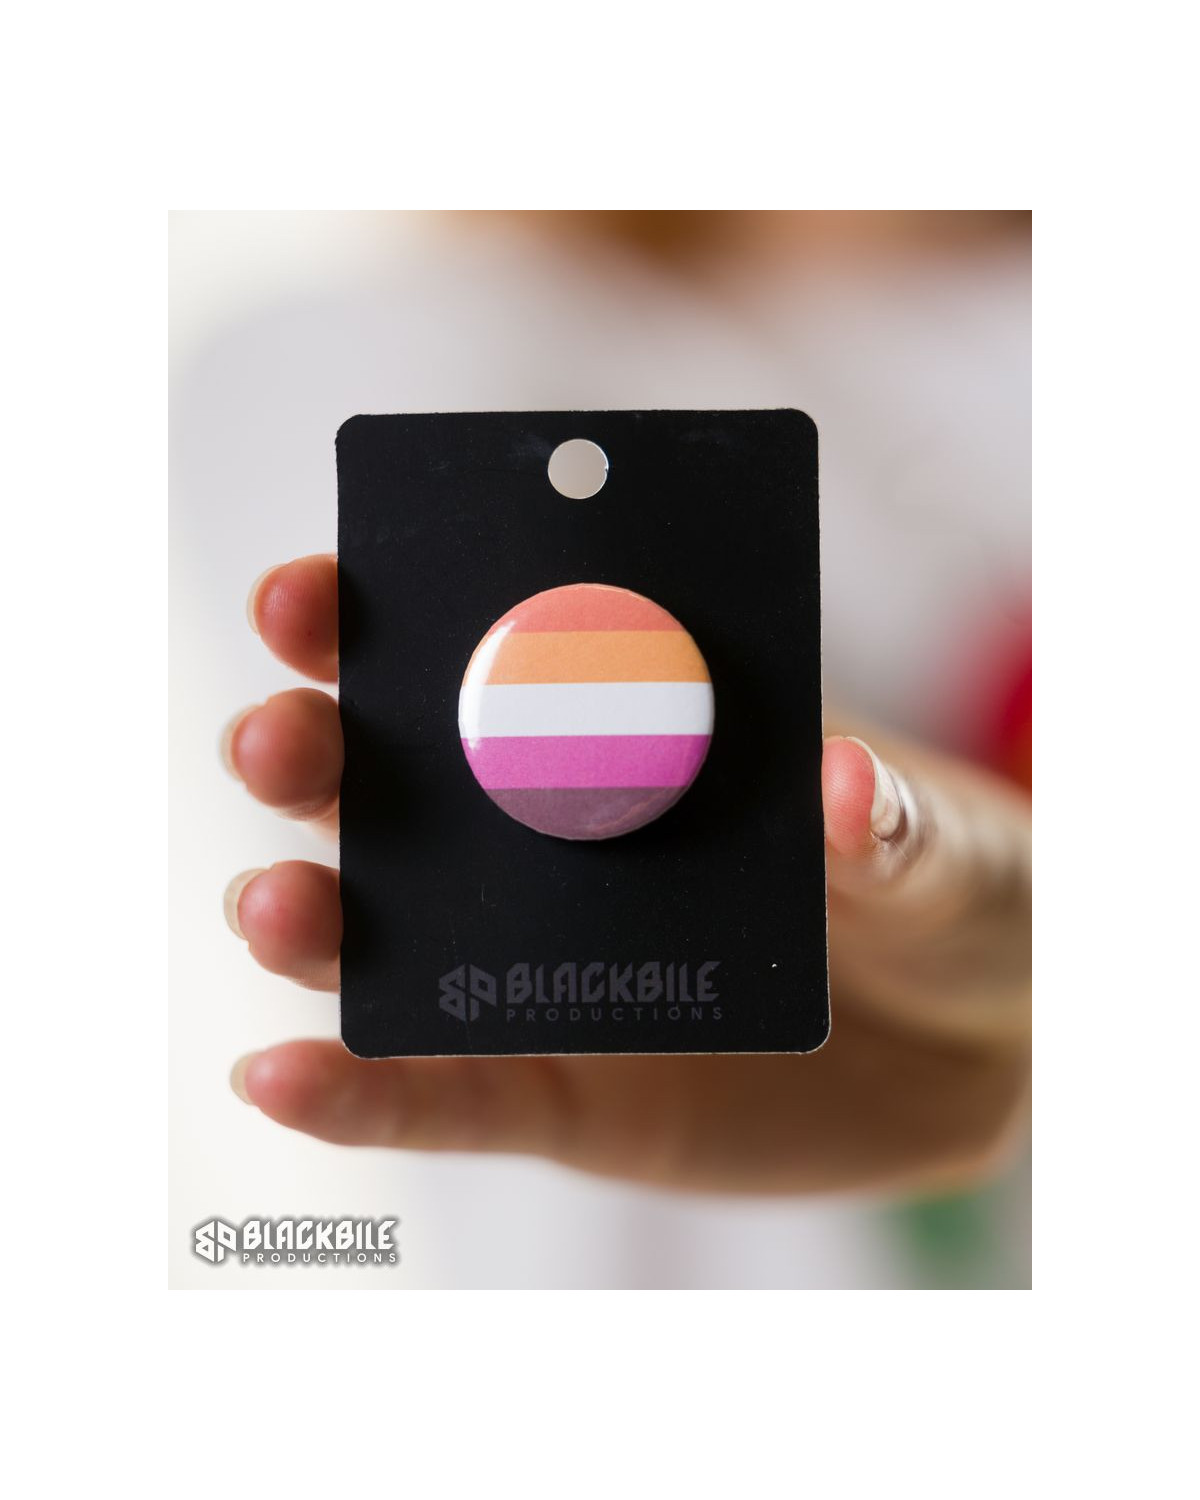 Small lesbian button badge